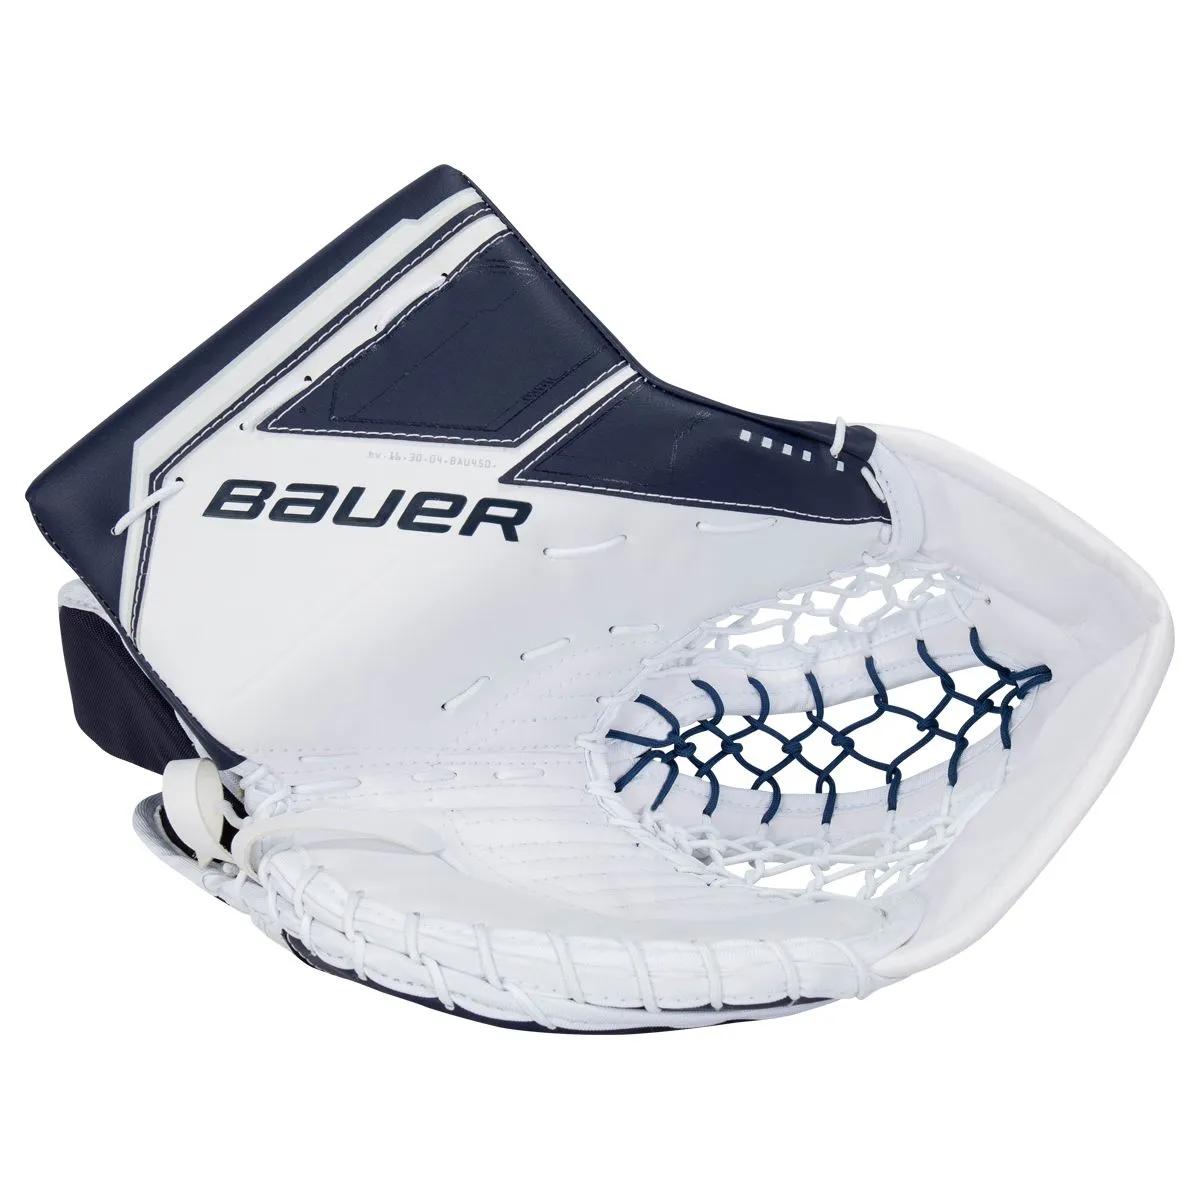 Bauer Supreme M5 Pro Int. Goalie Gloveproduct zoom image #1